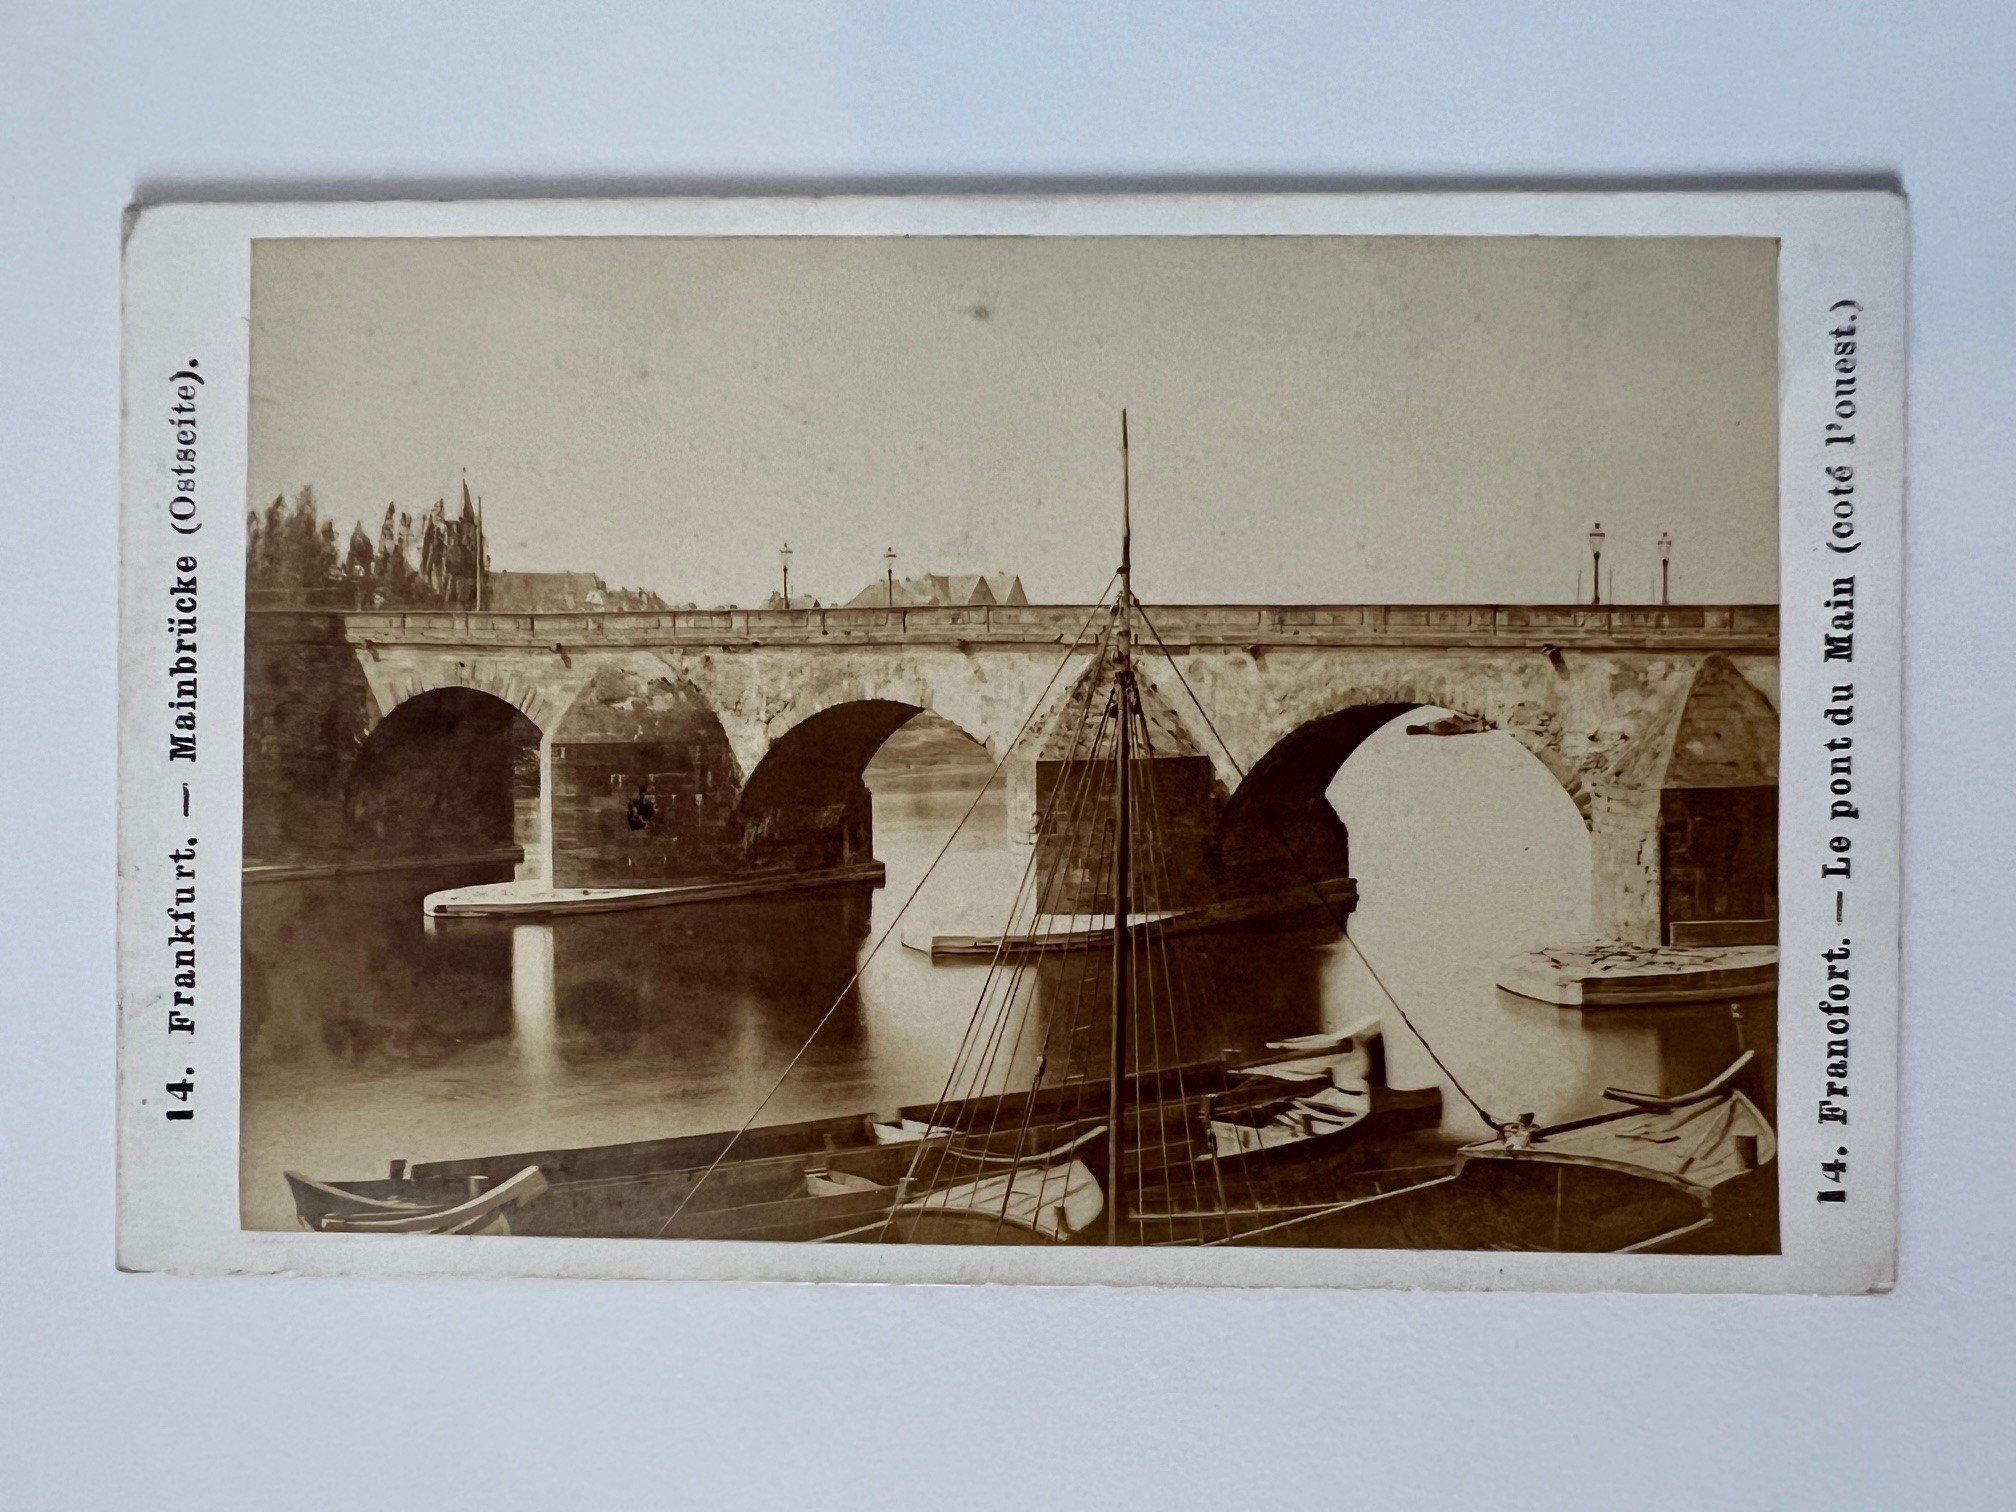 CdV, Frantisek Fridrich, Frankfurt, Nr. 14, Mainbrücke, ca. 1875. (Taunus-Rhein-Main - Regionalgeschichtliche Sammlung Dr. Stefan Naas CC BY-NC-SA)